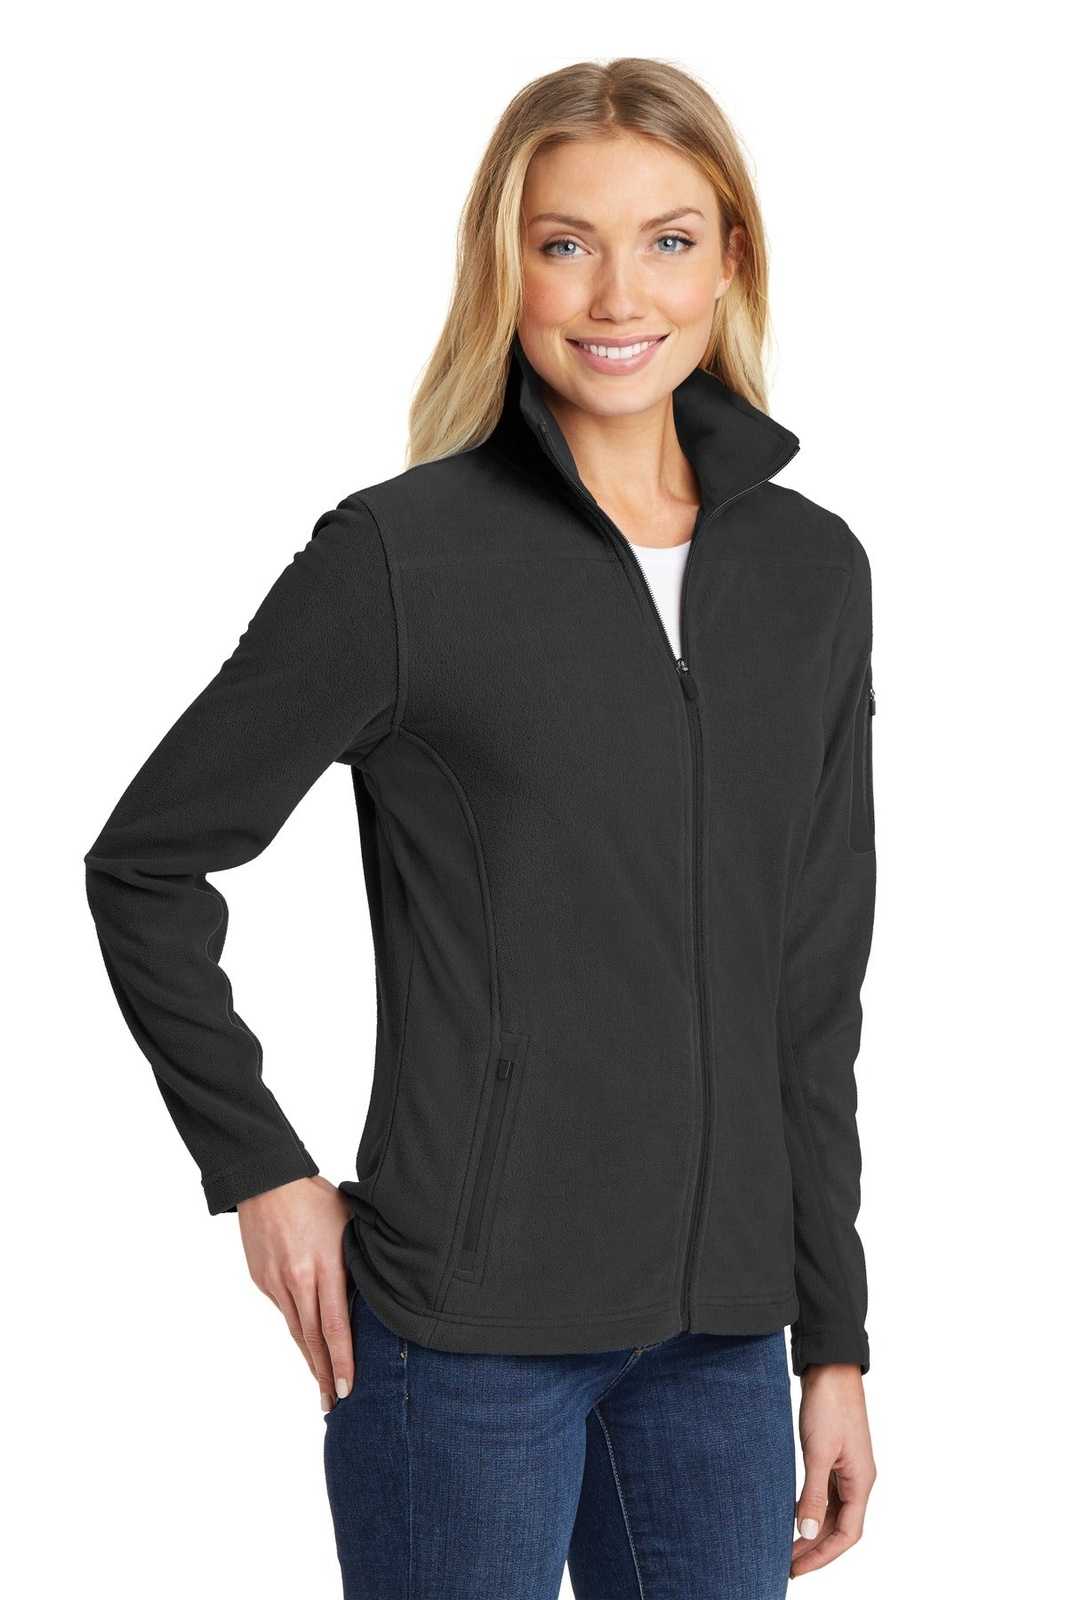 Port Authority L233 Ladies Summit Fleece Full-Zip Jacket - Black Black - HIT a Double - 4